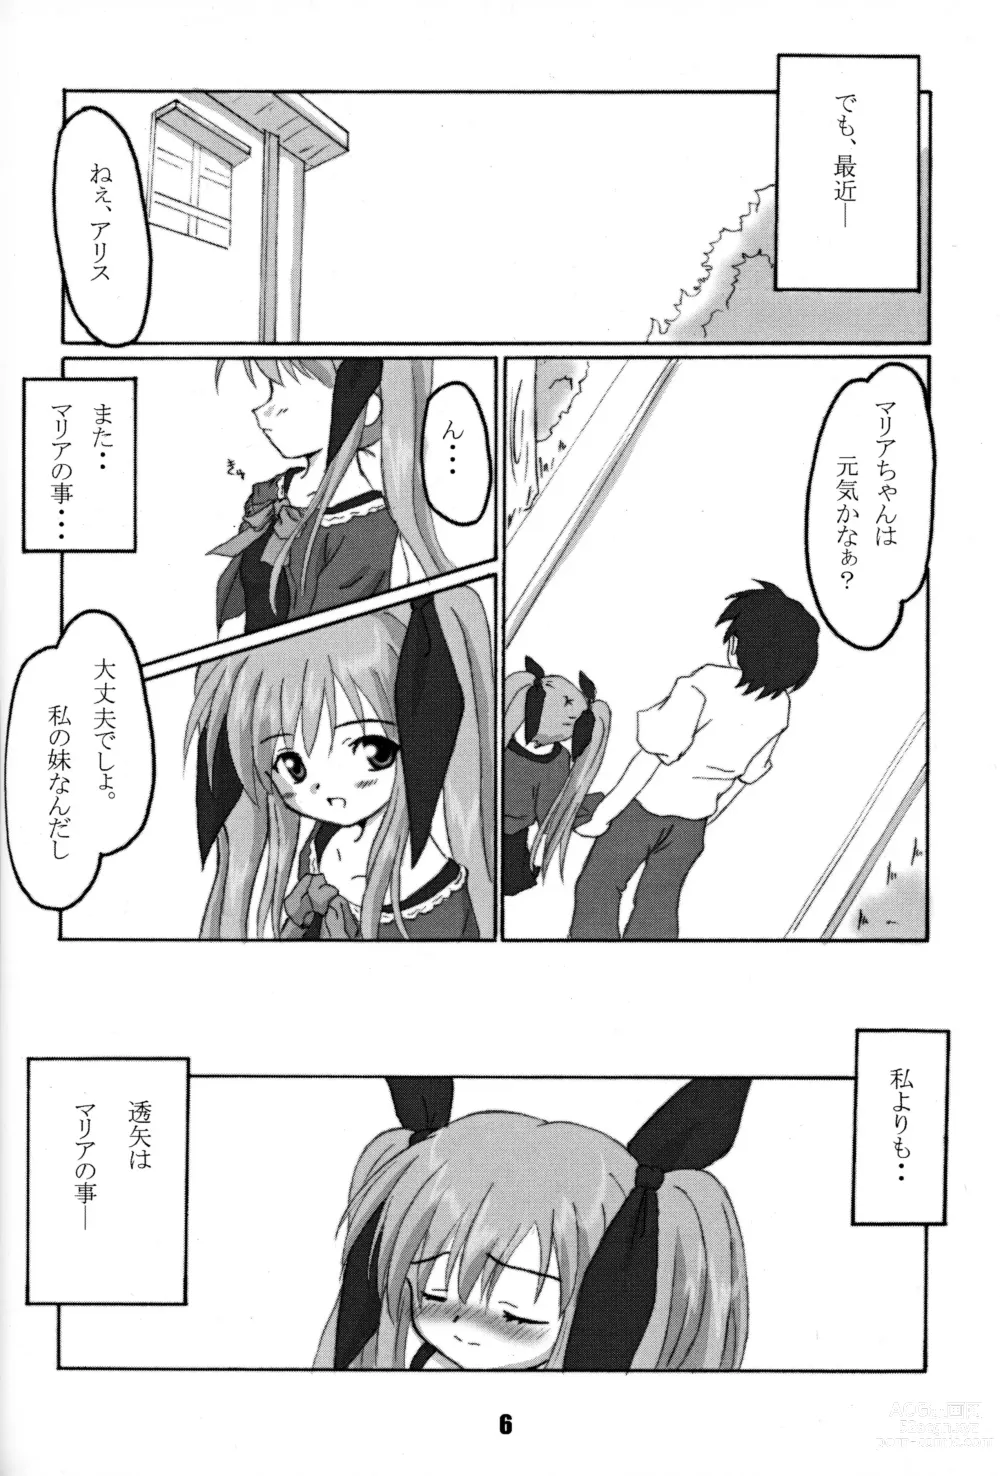 Page 5 of doujinshi Rollin 8